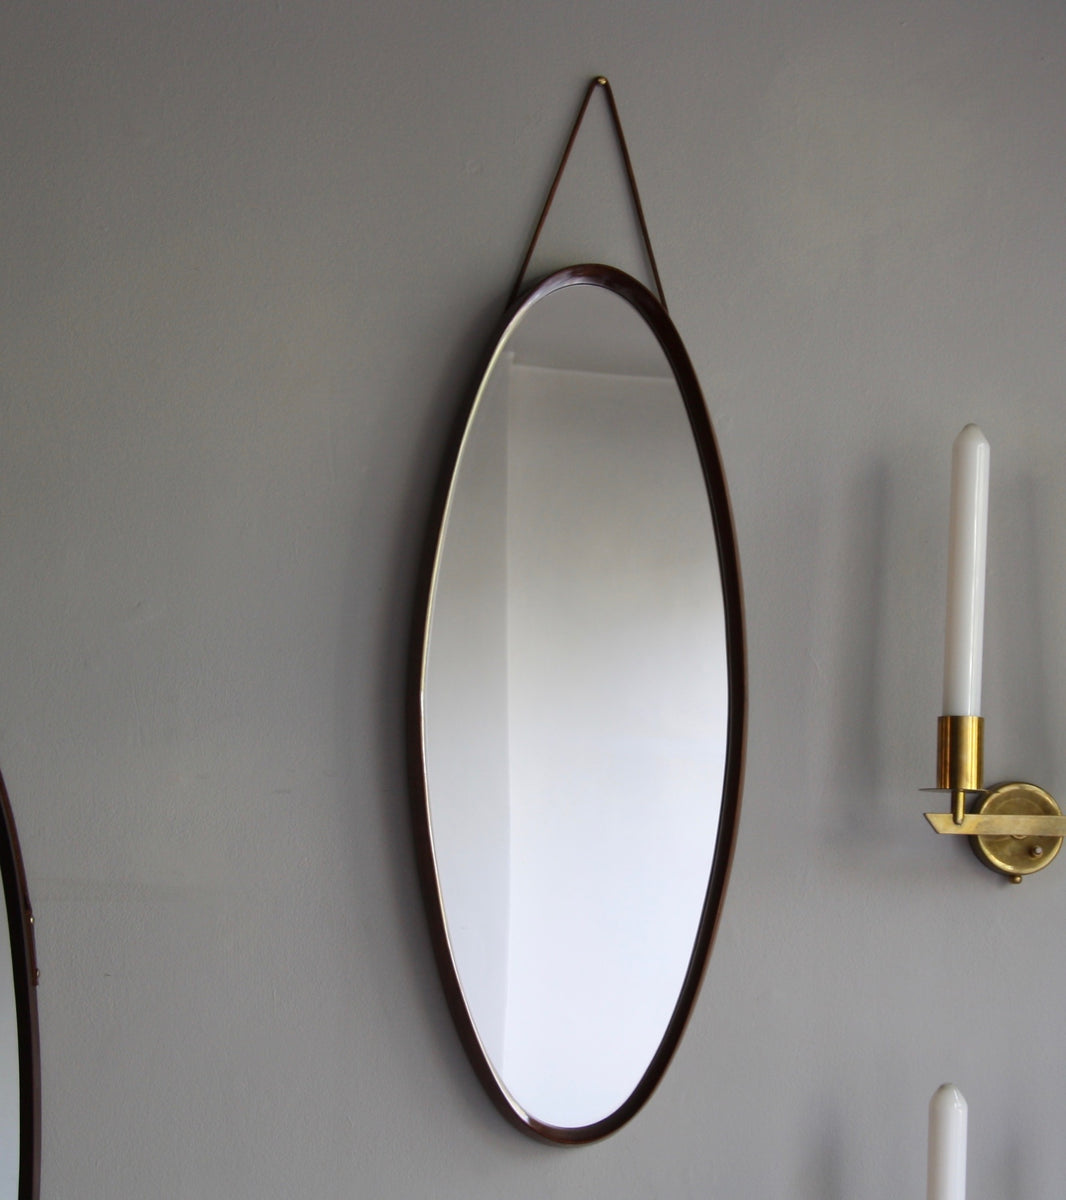 Teak Oval Mirror with Leather Denmark C. 1950 - Image 1